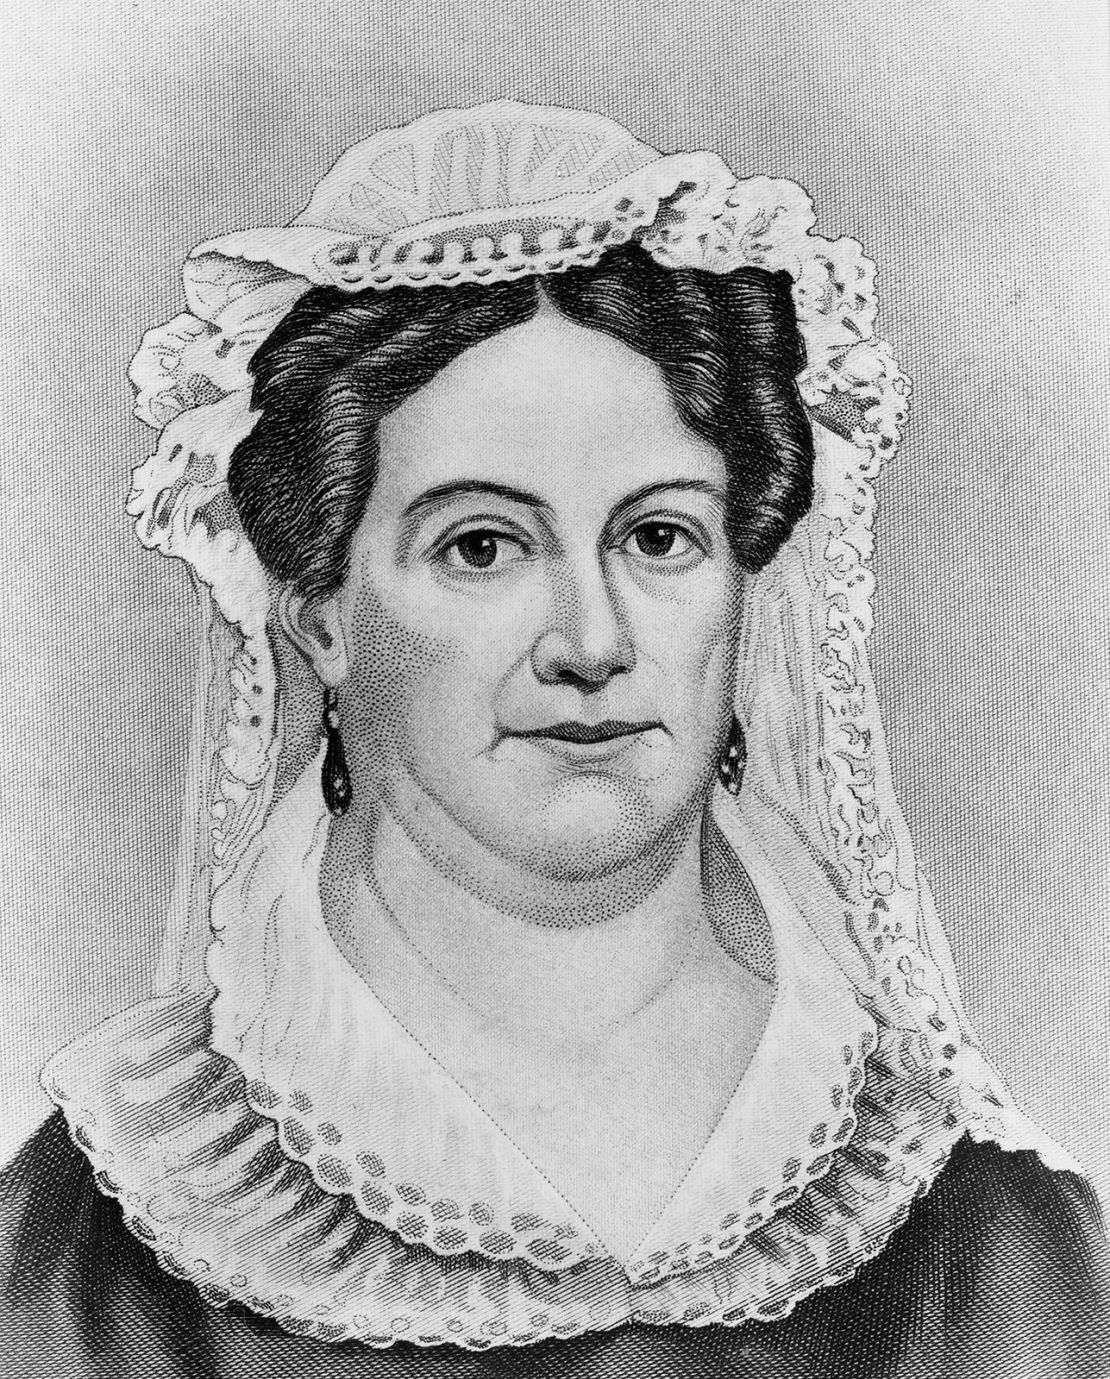 Rachel Jackson, wife of President Andrew Jackson.